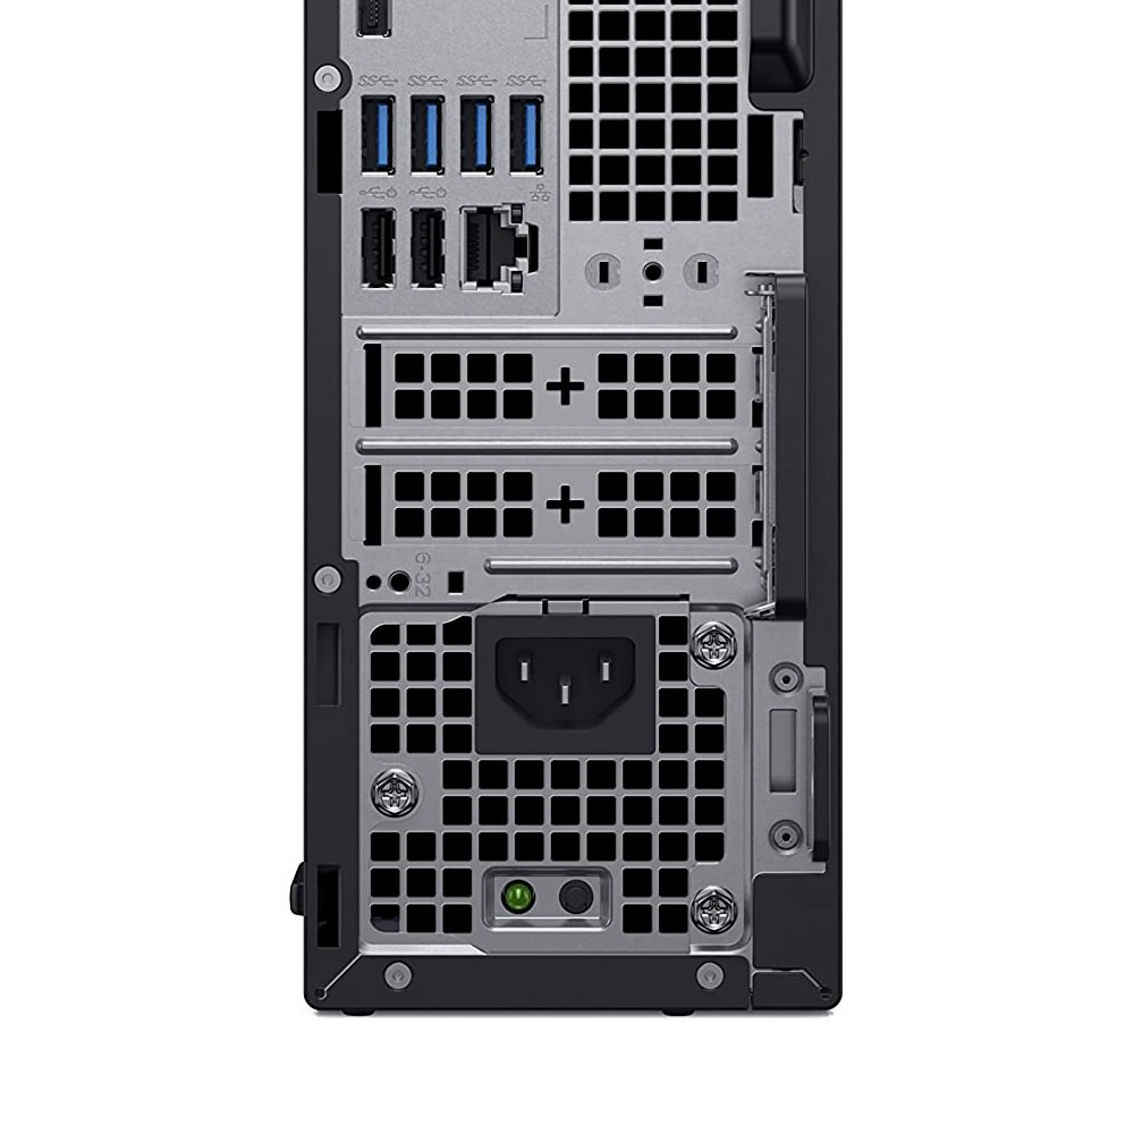 Dell 7060-SFF Core i7-8700 3.2GHz 16GB 512GB SSD PC (Refurbished) - Image 2 of 3